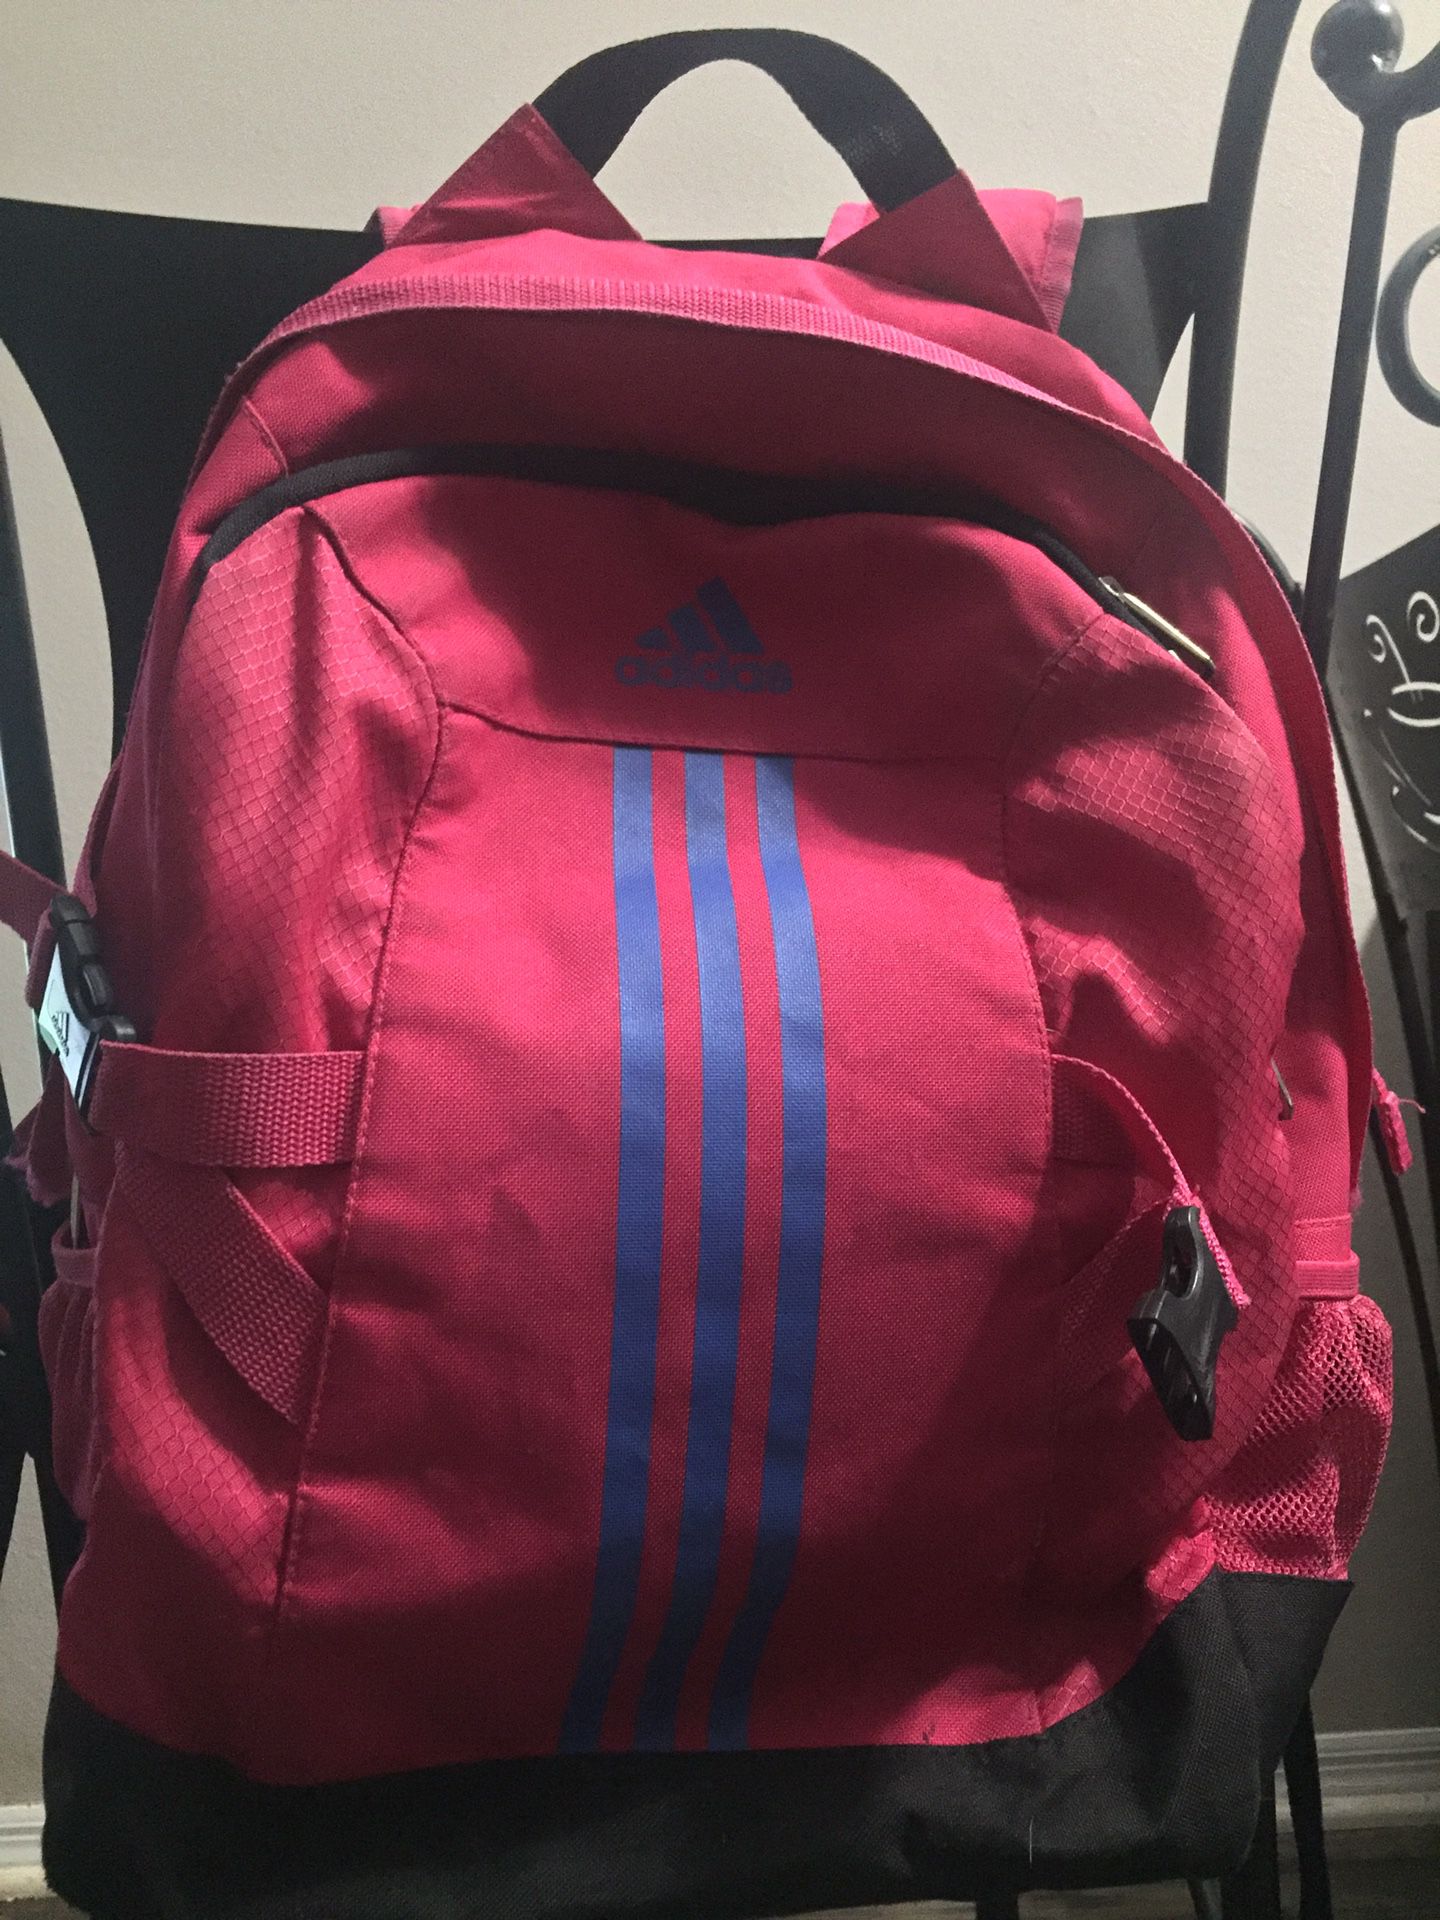 Adidas Pink Backpack, Very Stylish